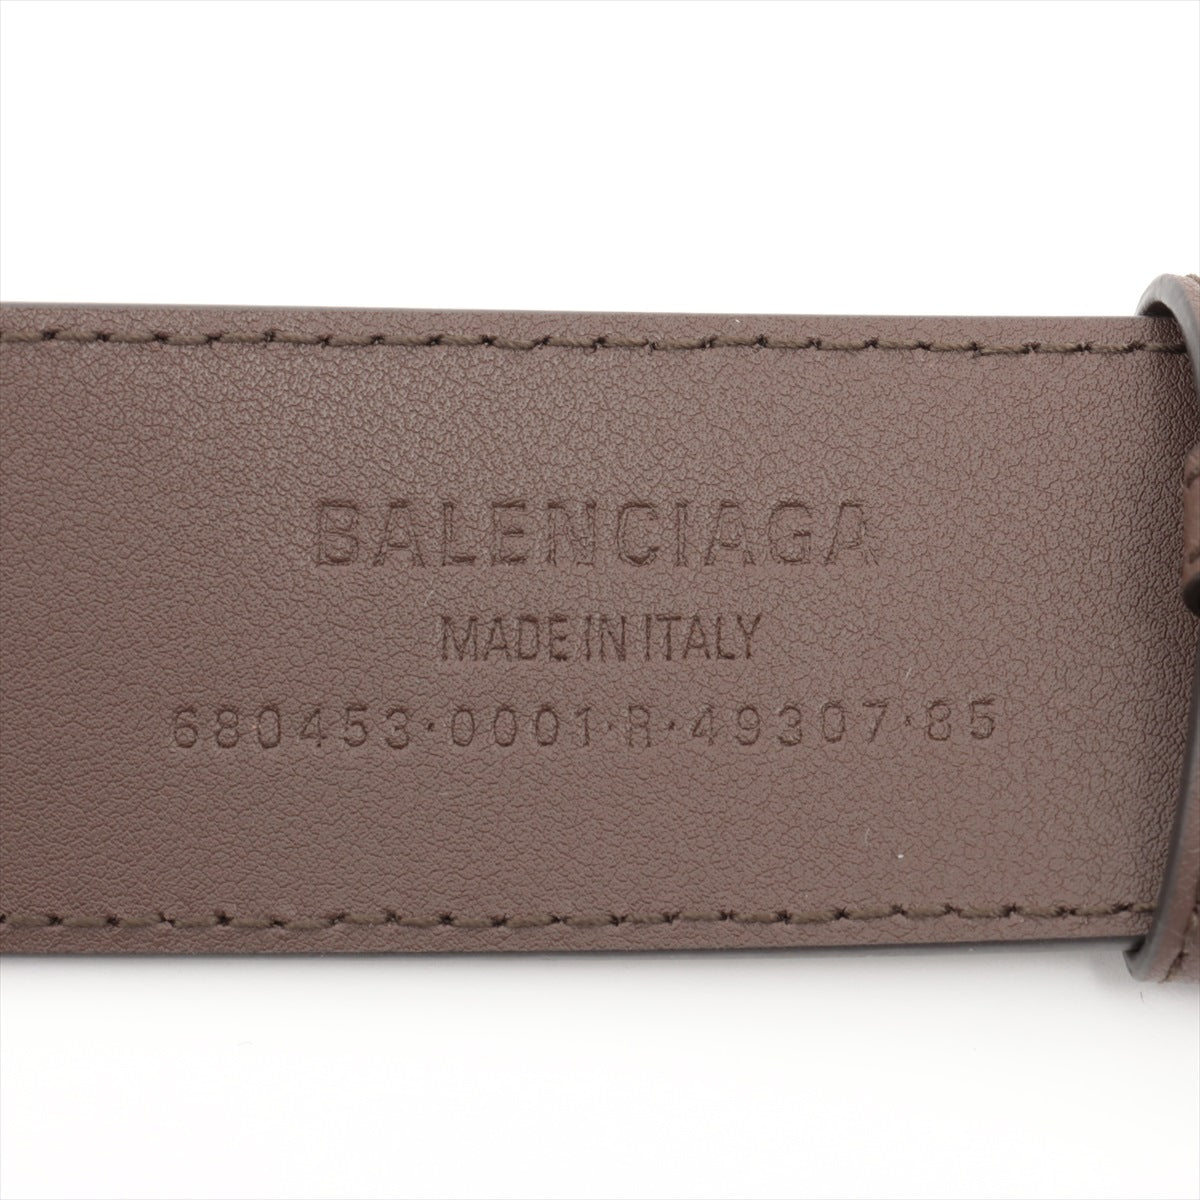 Gucci x Balenciaga 680453 Belt 85 PVC & leather Brown